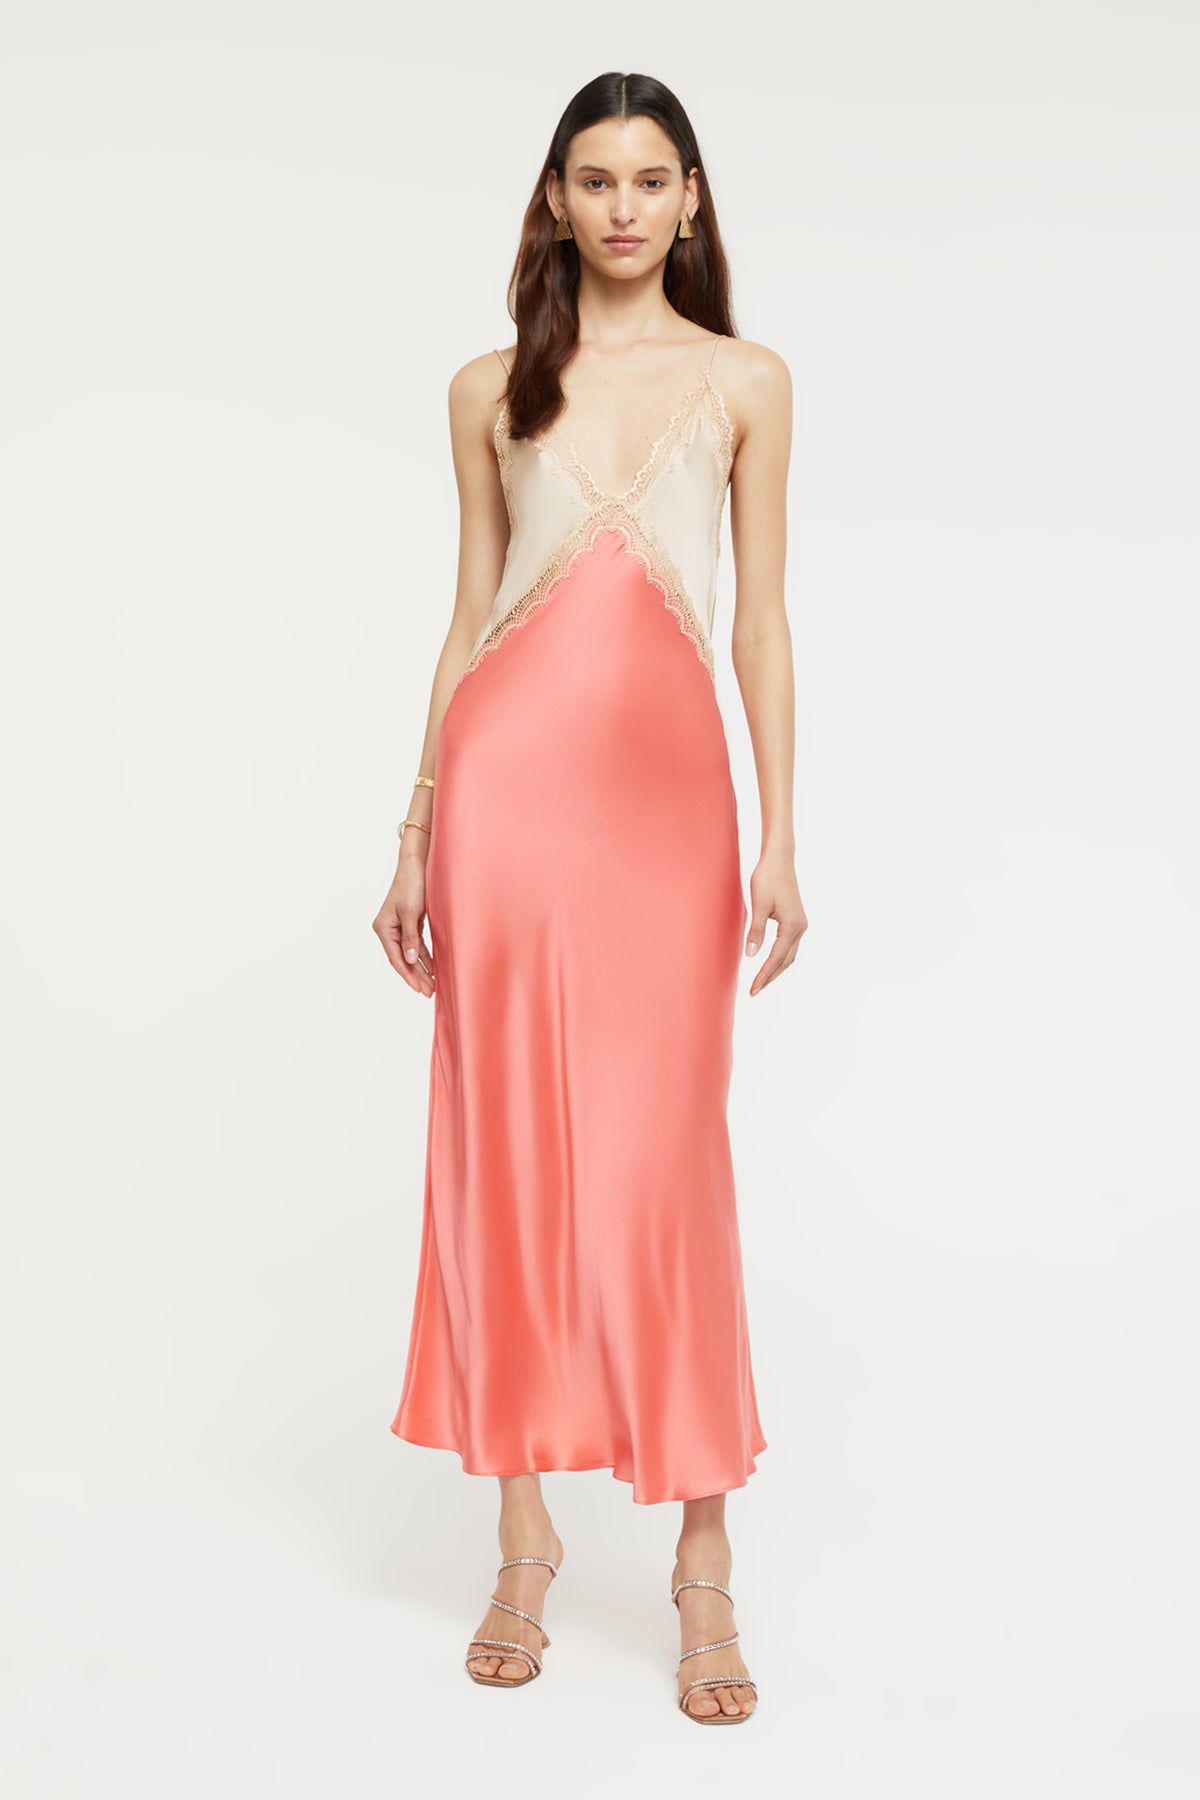 Sadie Dress in Almond Coral - 100% Silk | Ginia RTW